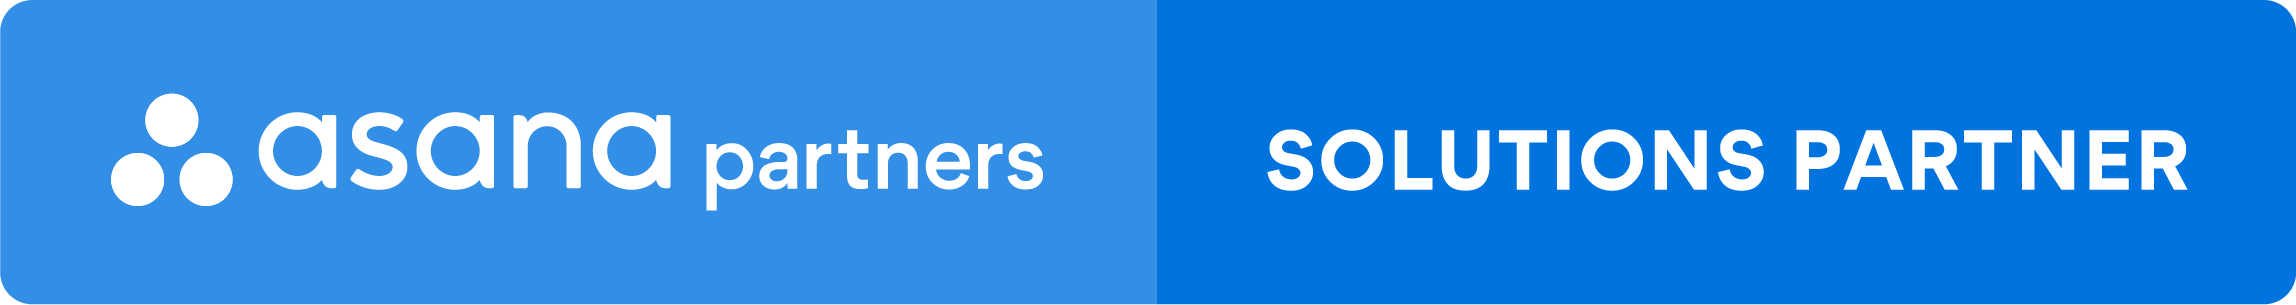 badge_asana-partners_solutions-partner_horizontal-blue